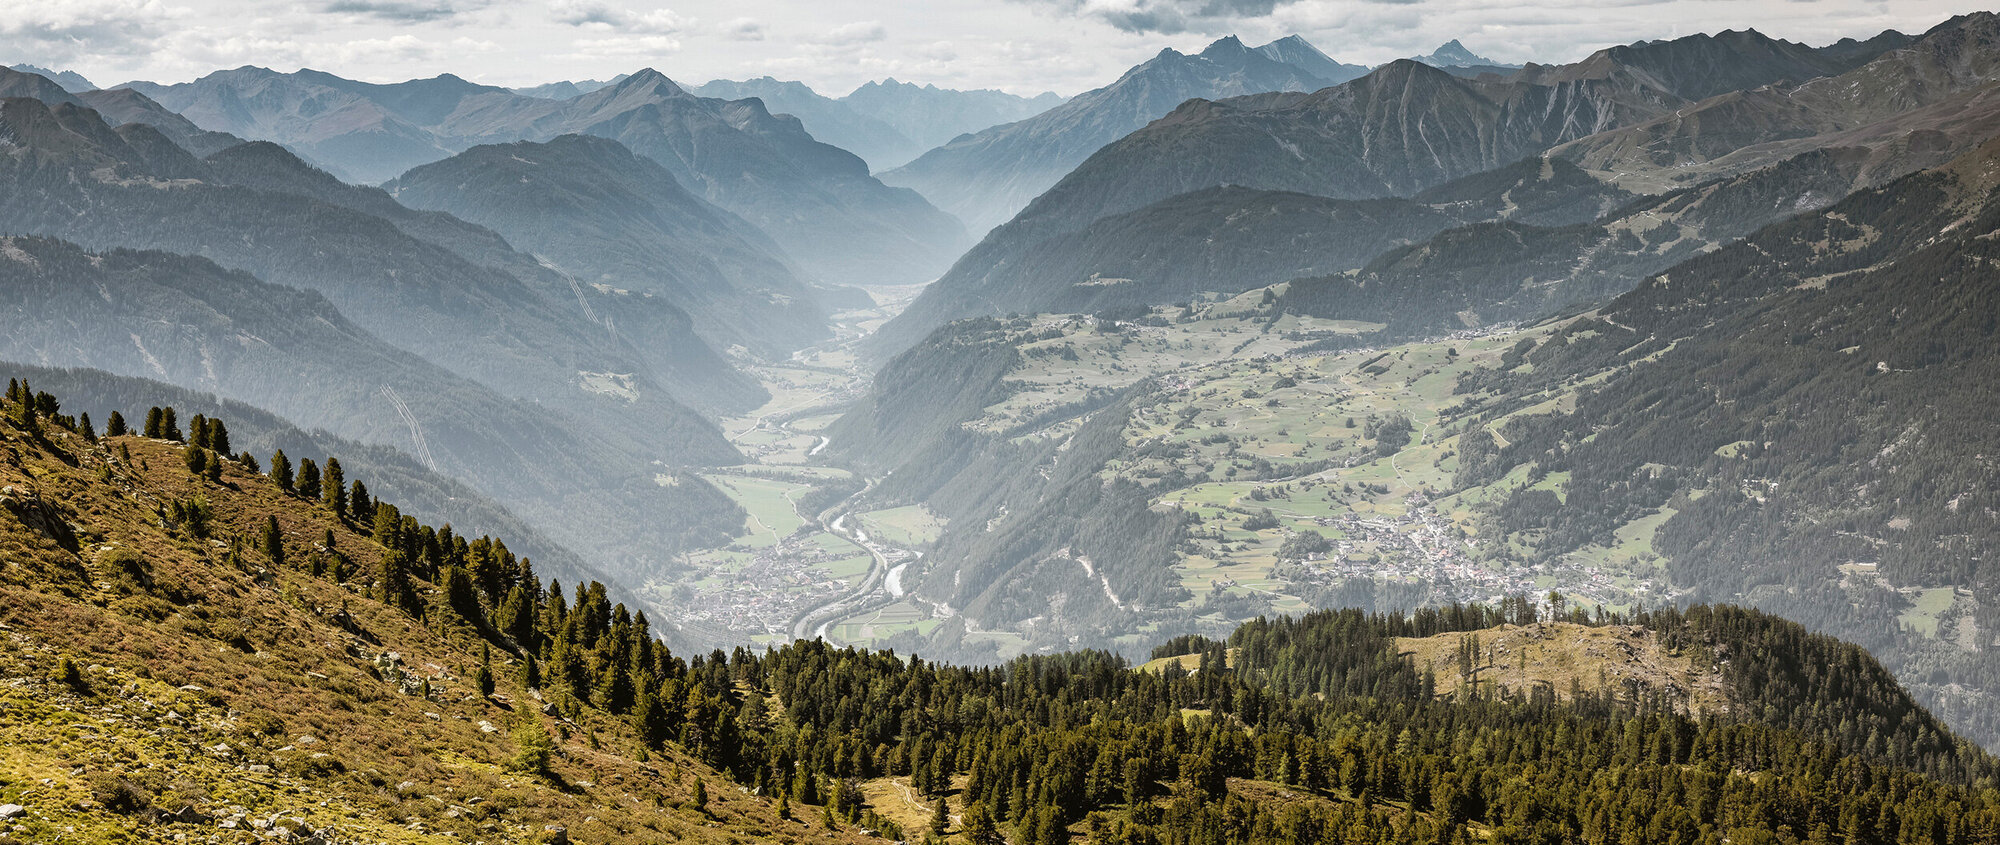  Aifnerspitze, ©TVB Tiroler Oberland; Rudi Wyhlidal